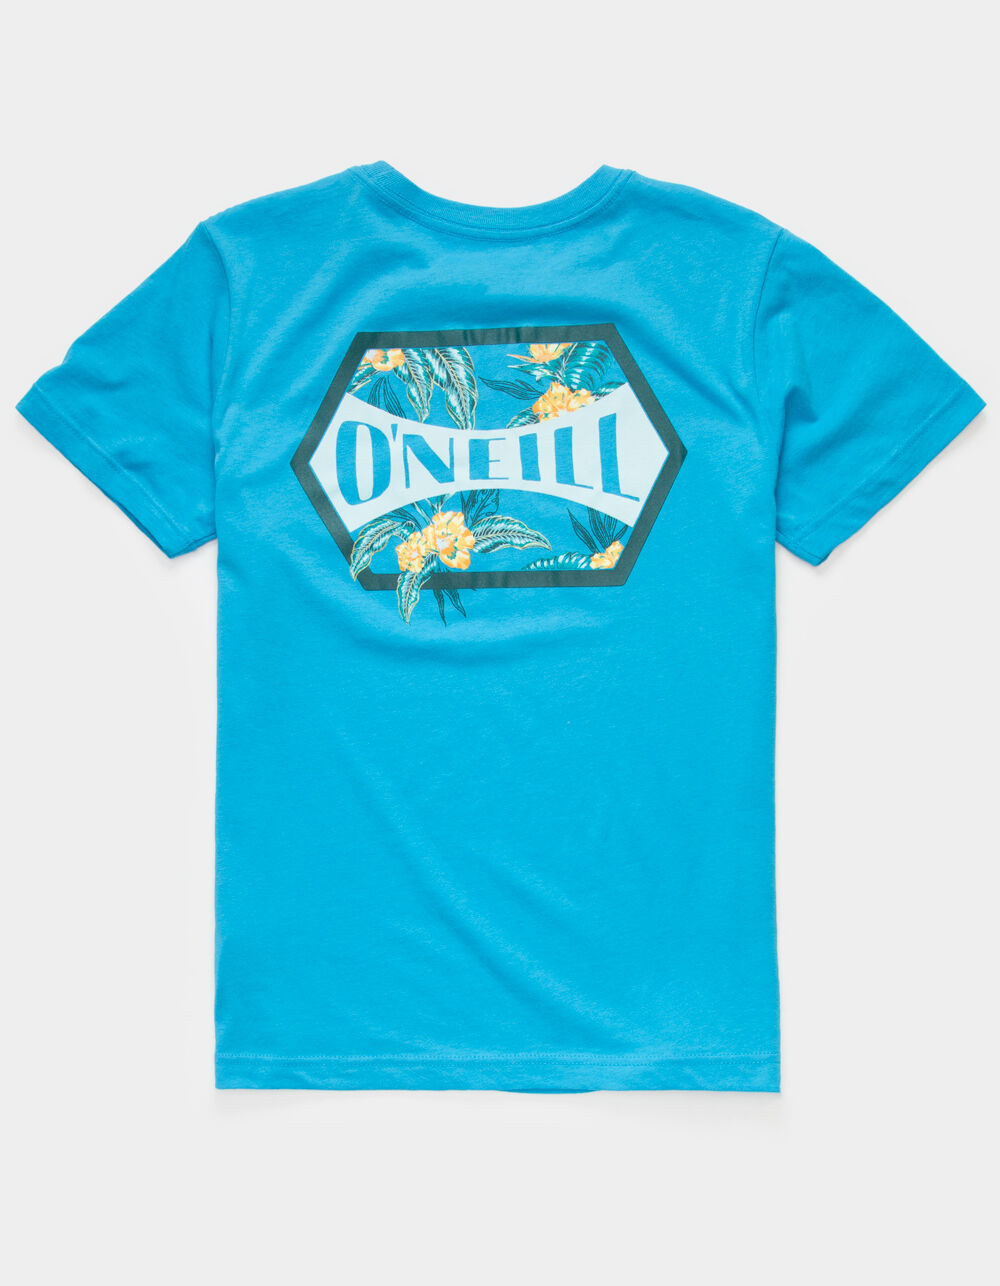 O'NEILL Tropic Thunder Boys T-Shirt - BLUE | Tillys